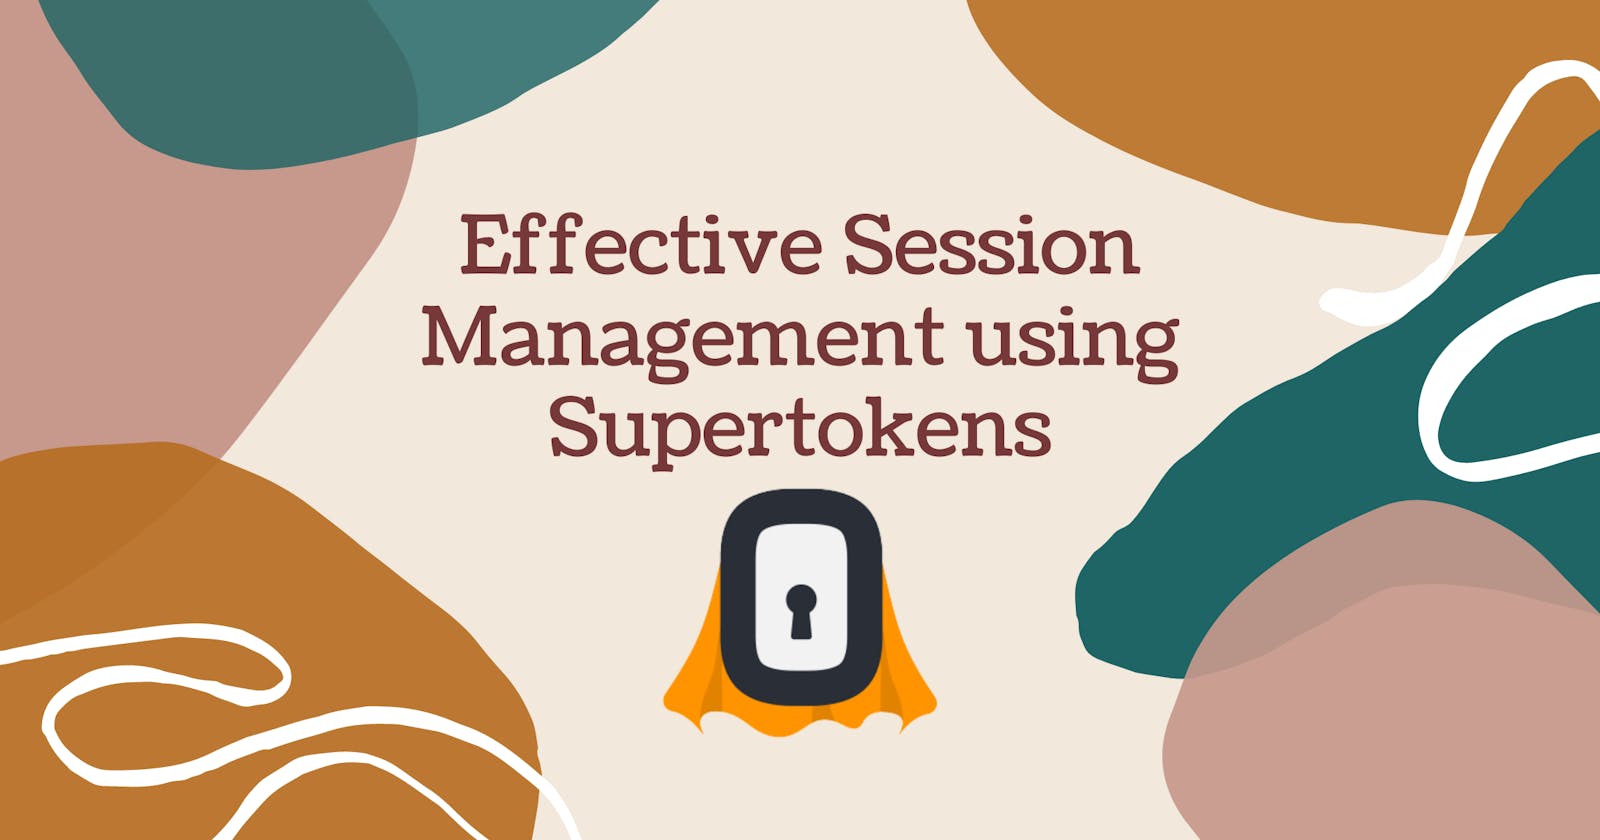 Effective Session Management using Supertokens